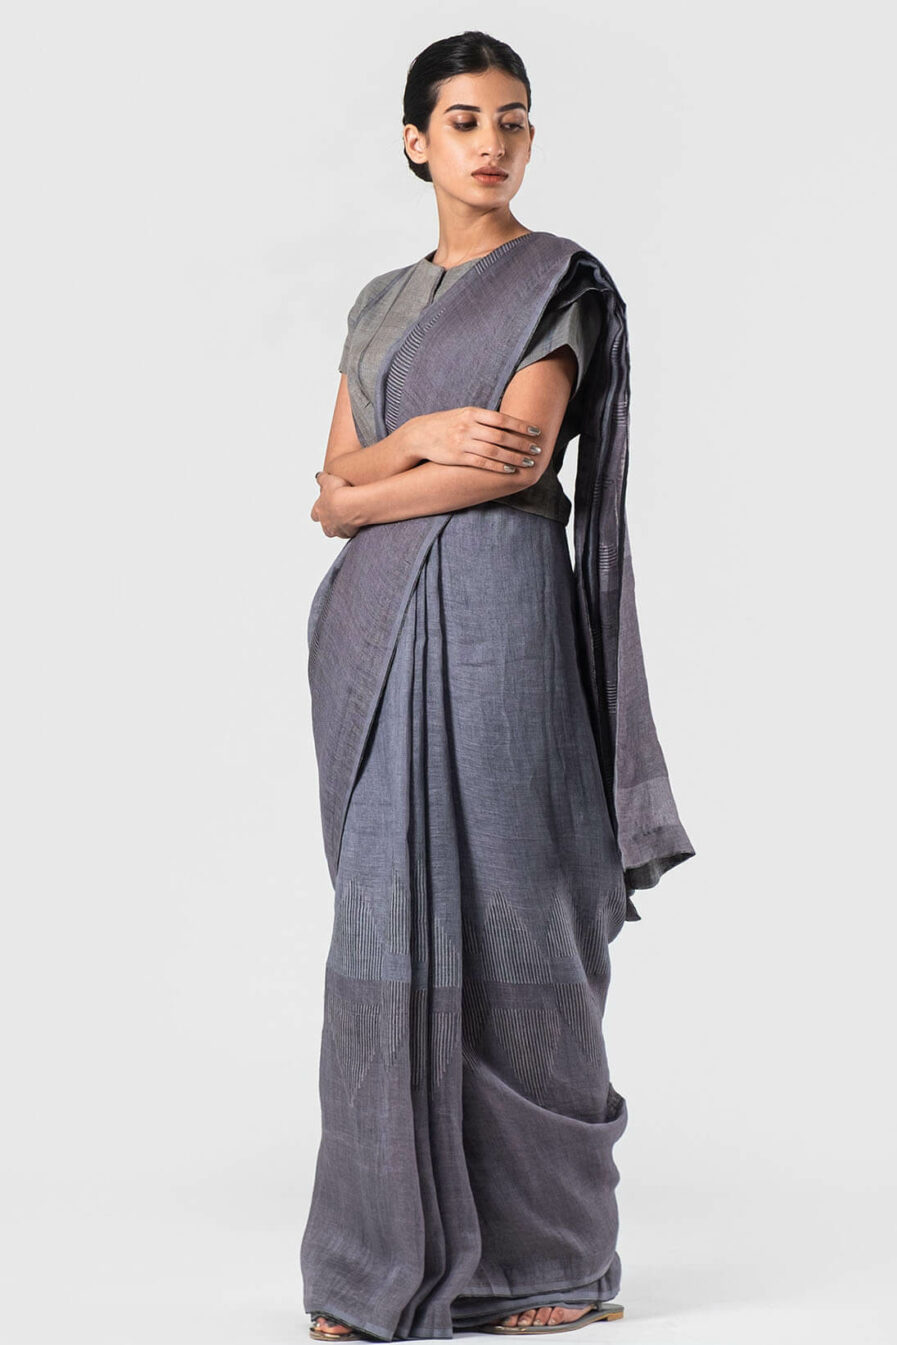 Anavila Dark grey Temple jacquard linen sari